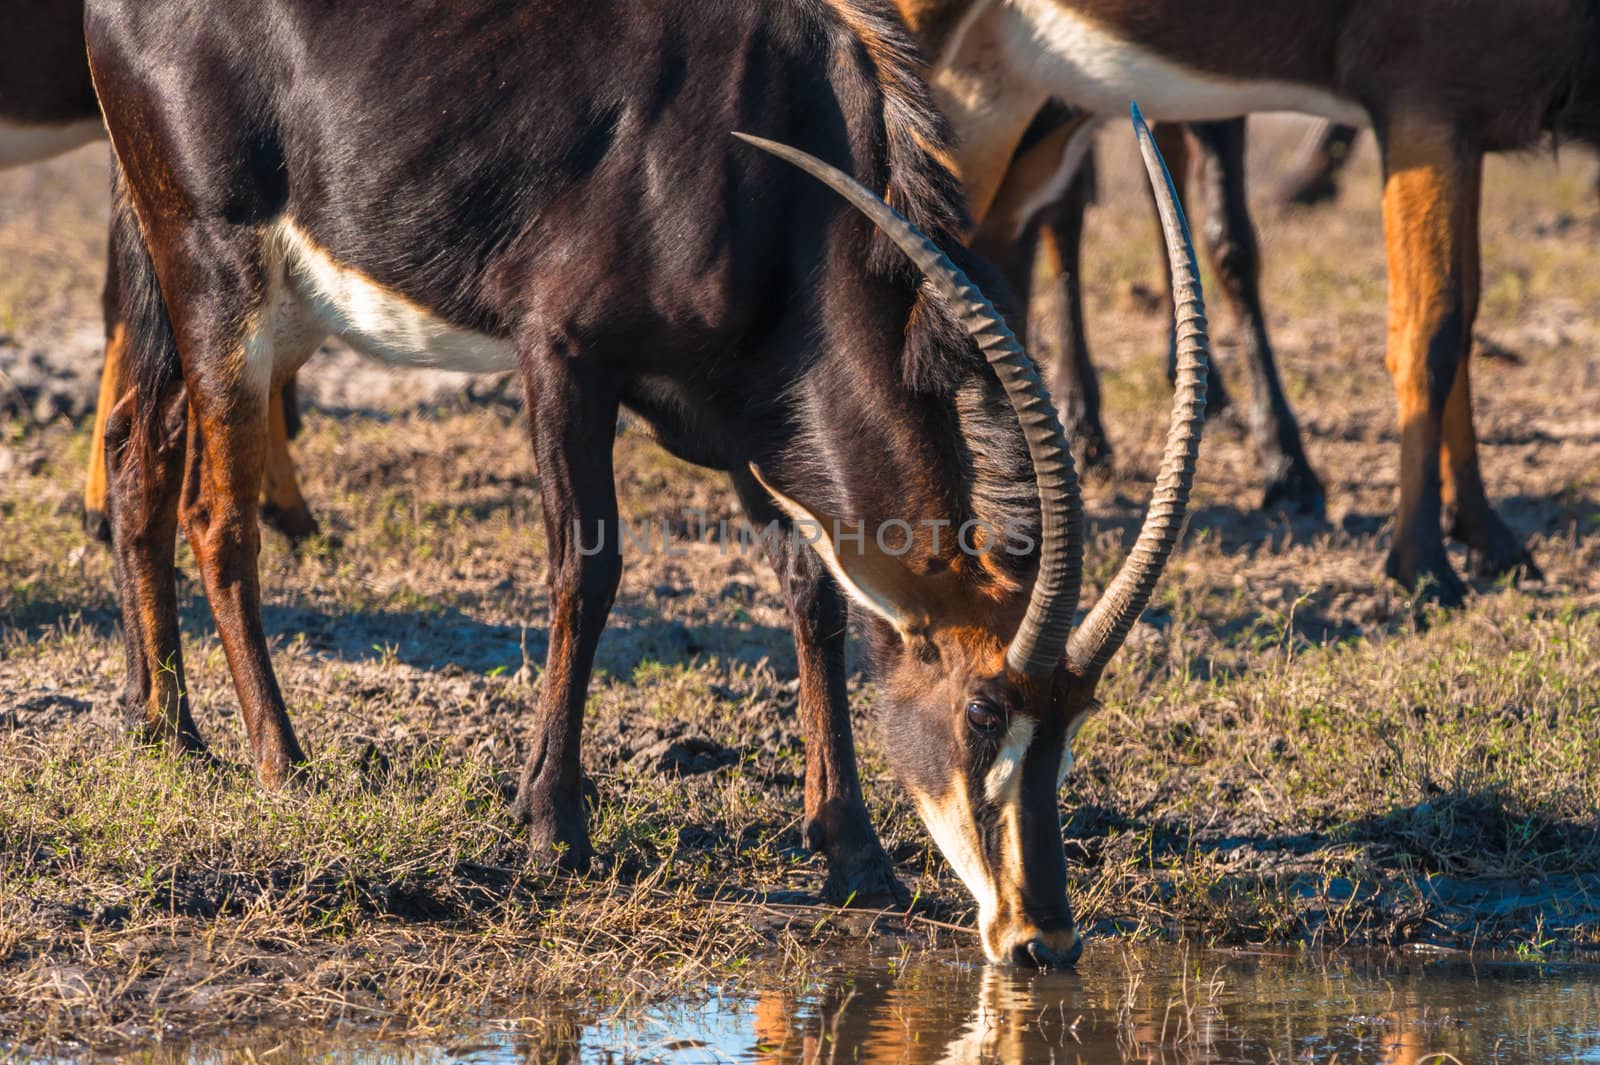 Oryx by water by edan